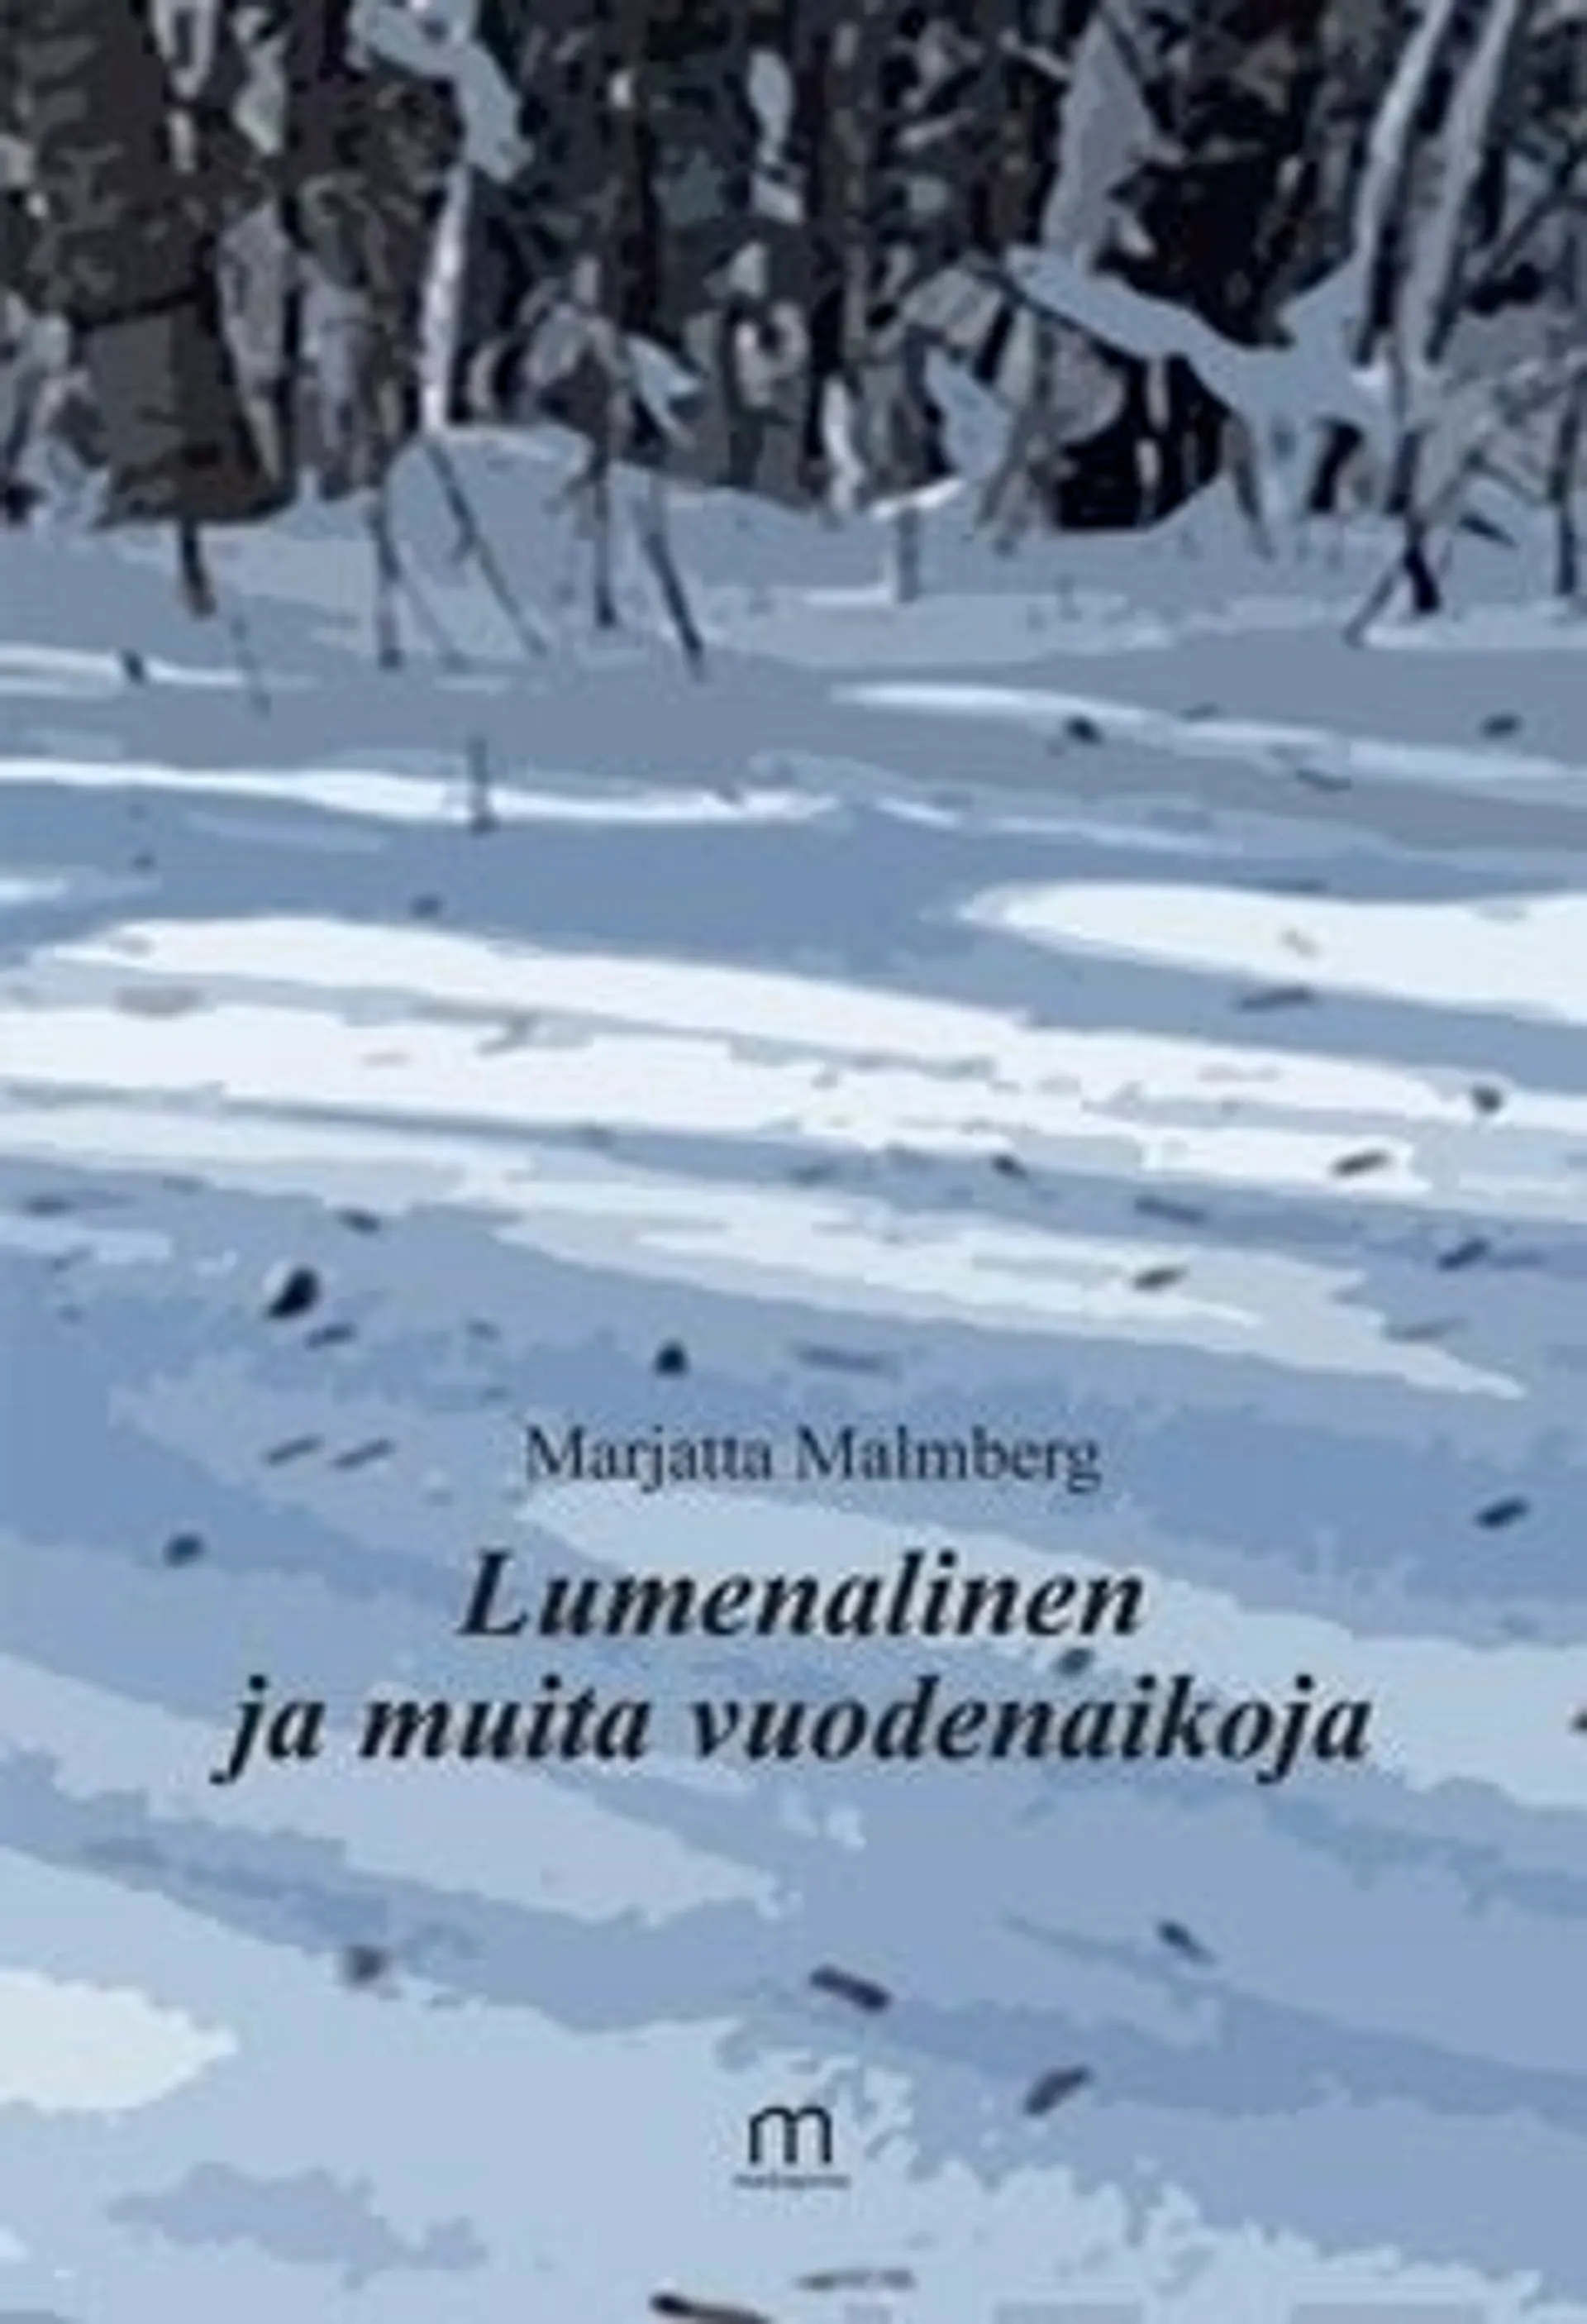 Malmberg, Lumenalinen ja muita vuodenaikoja